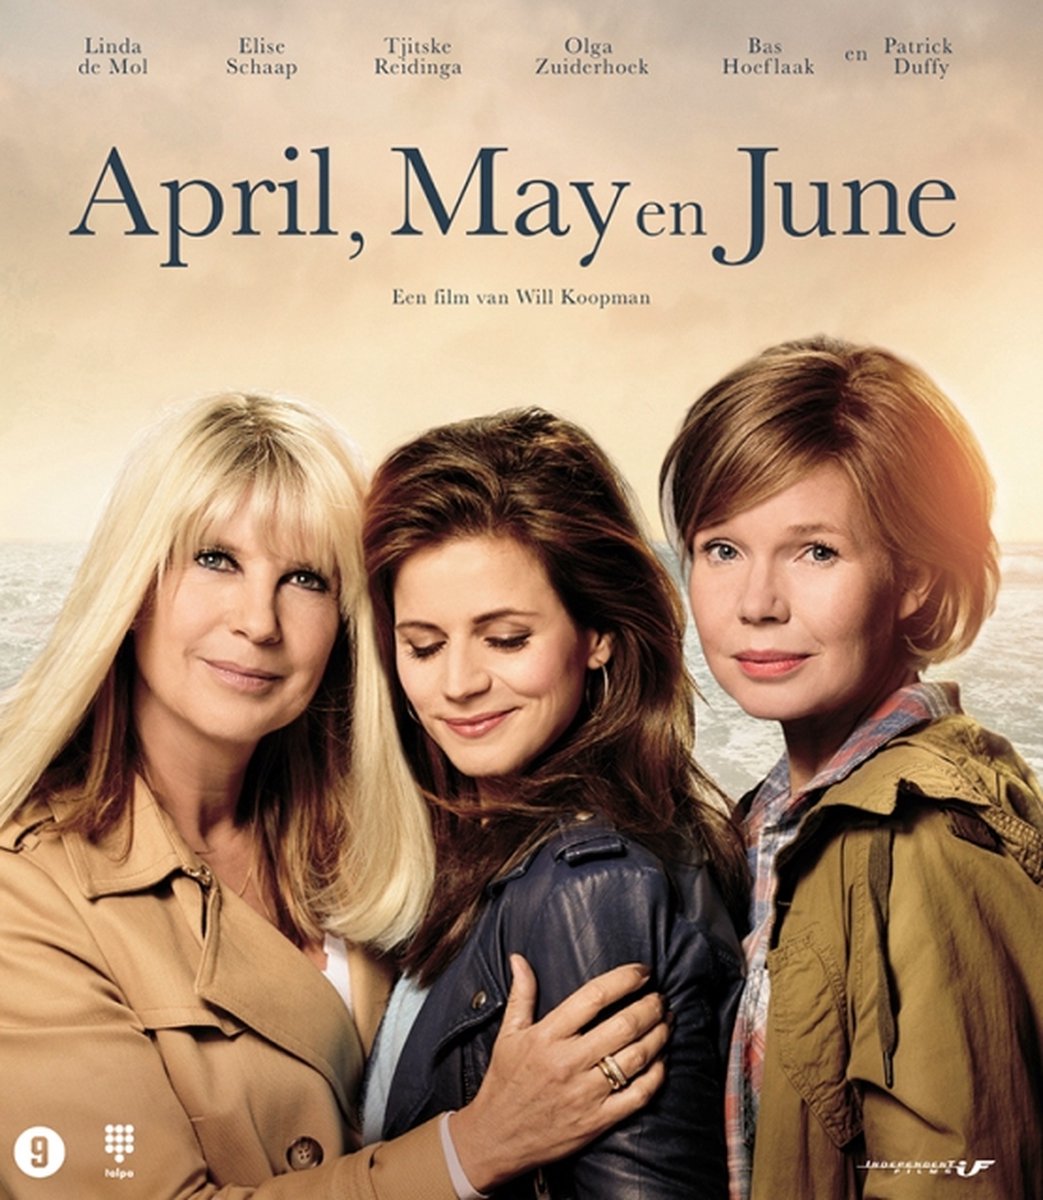 April, May En June (Blu-ray) Dramafilm over 3 halfzussen